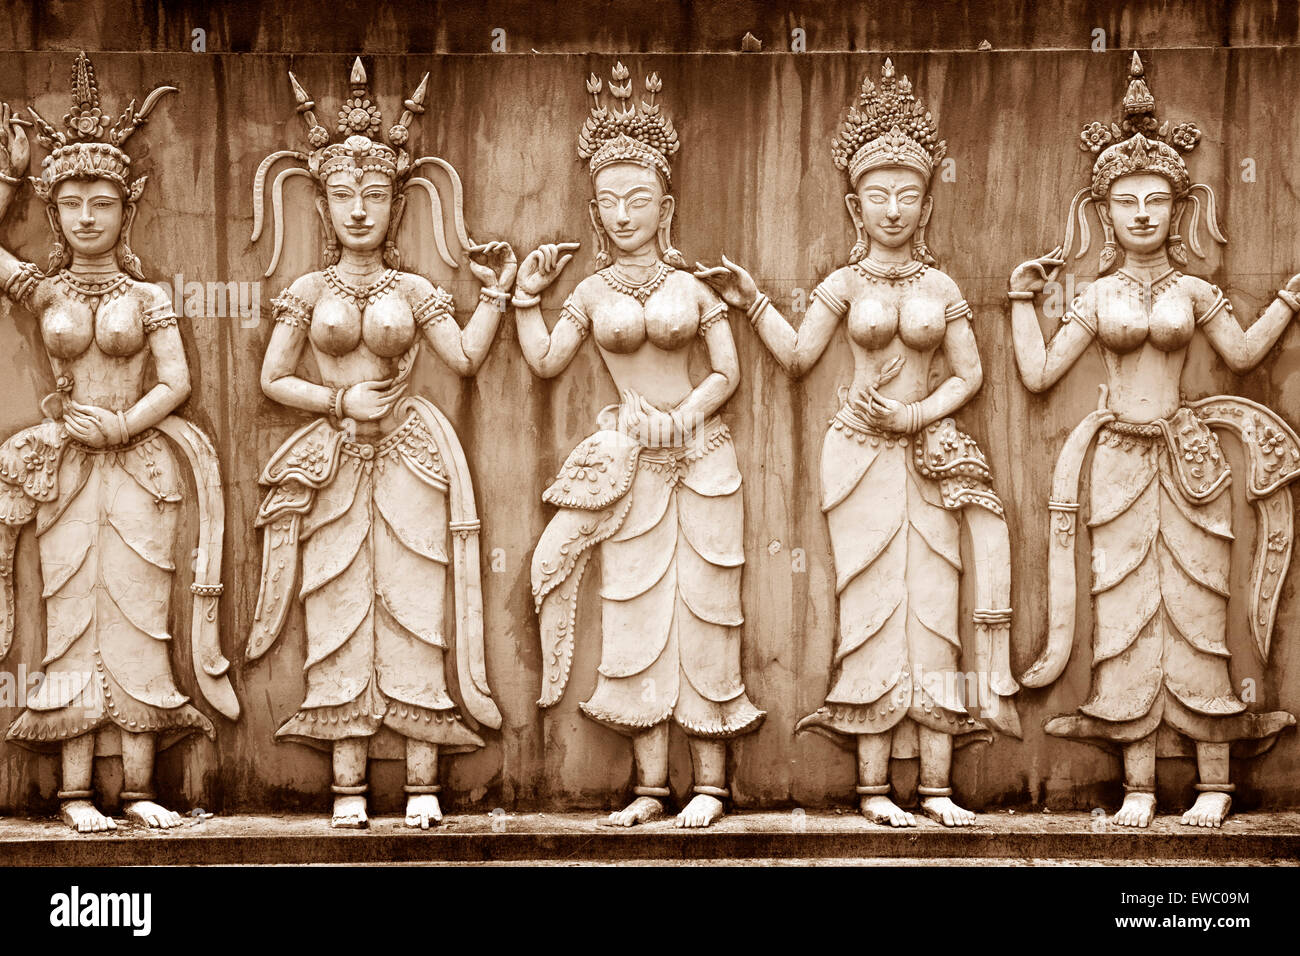 Wall sculpture of ancient Khmer art, culture venues Stock Photo - Alamy